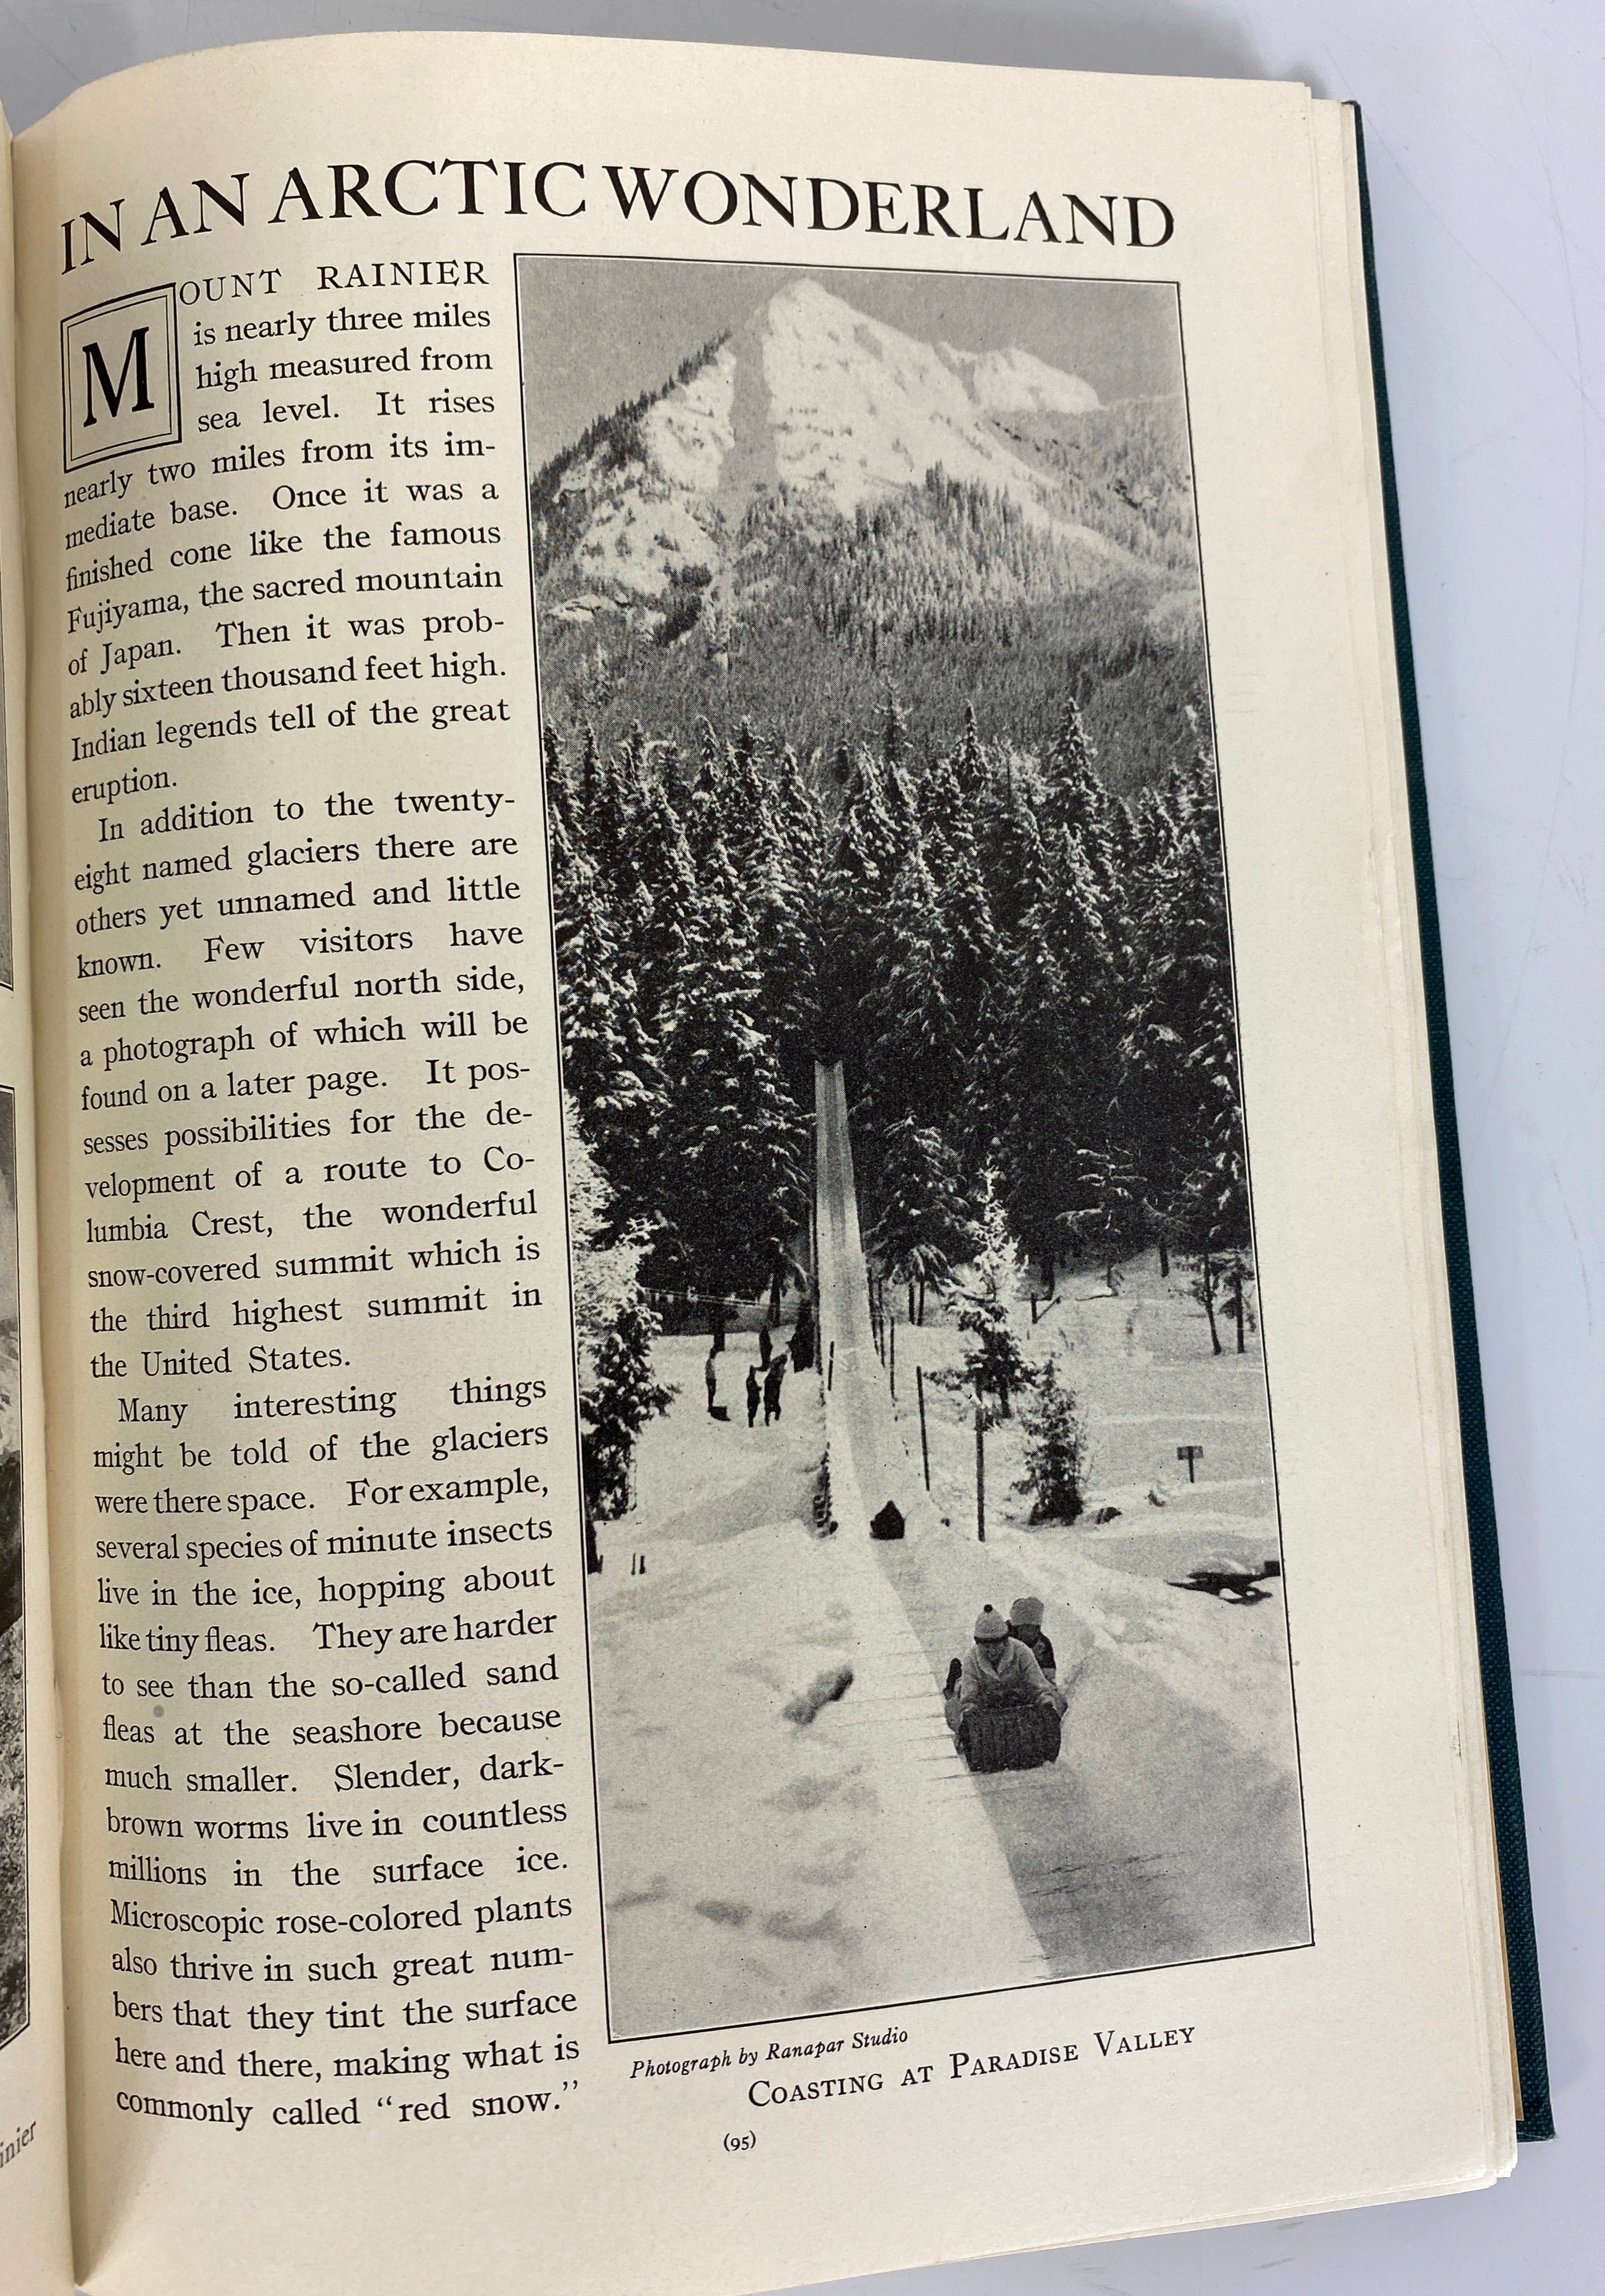 National Parks Portfolio Fifth Edition 1928 U.S. Department of the Interior HC